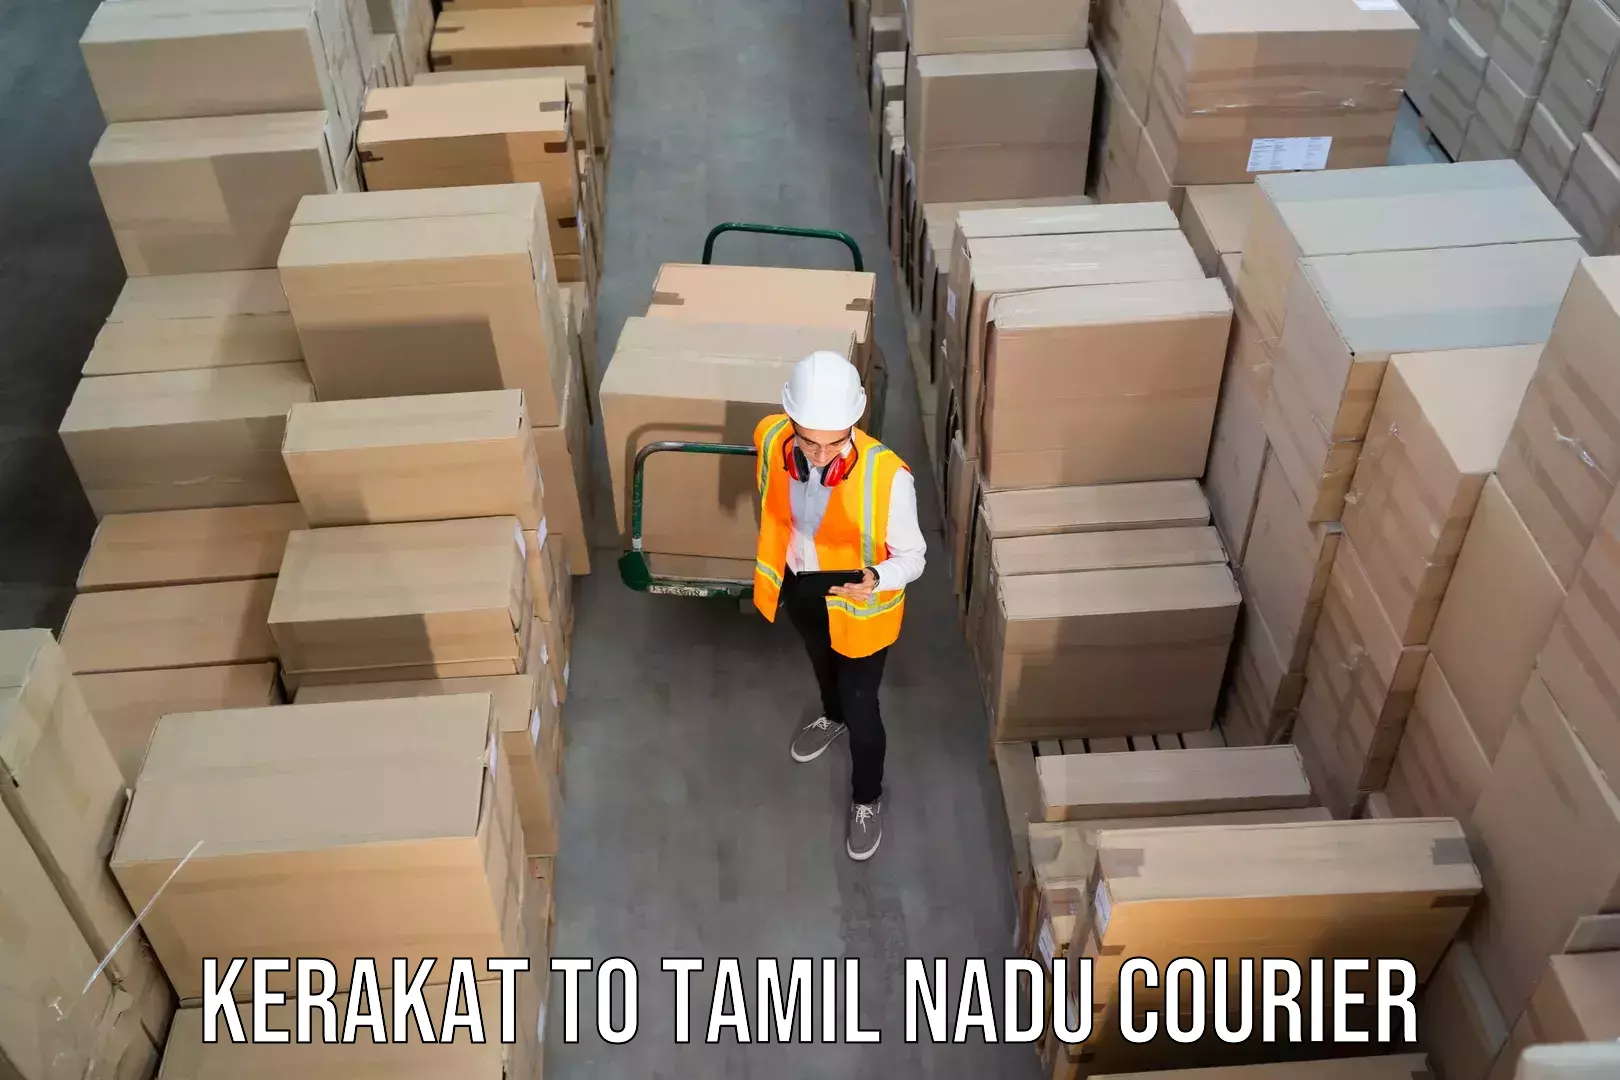 Next day courier Kerakat to Tamil Nadu